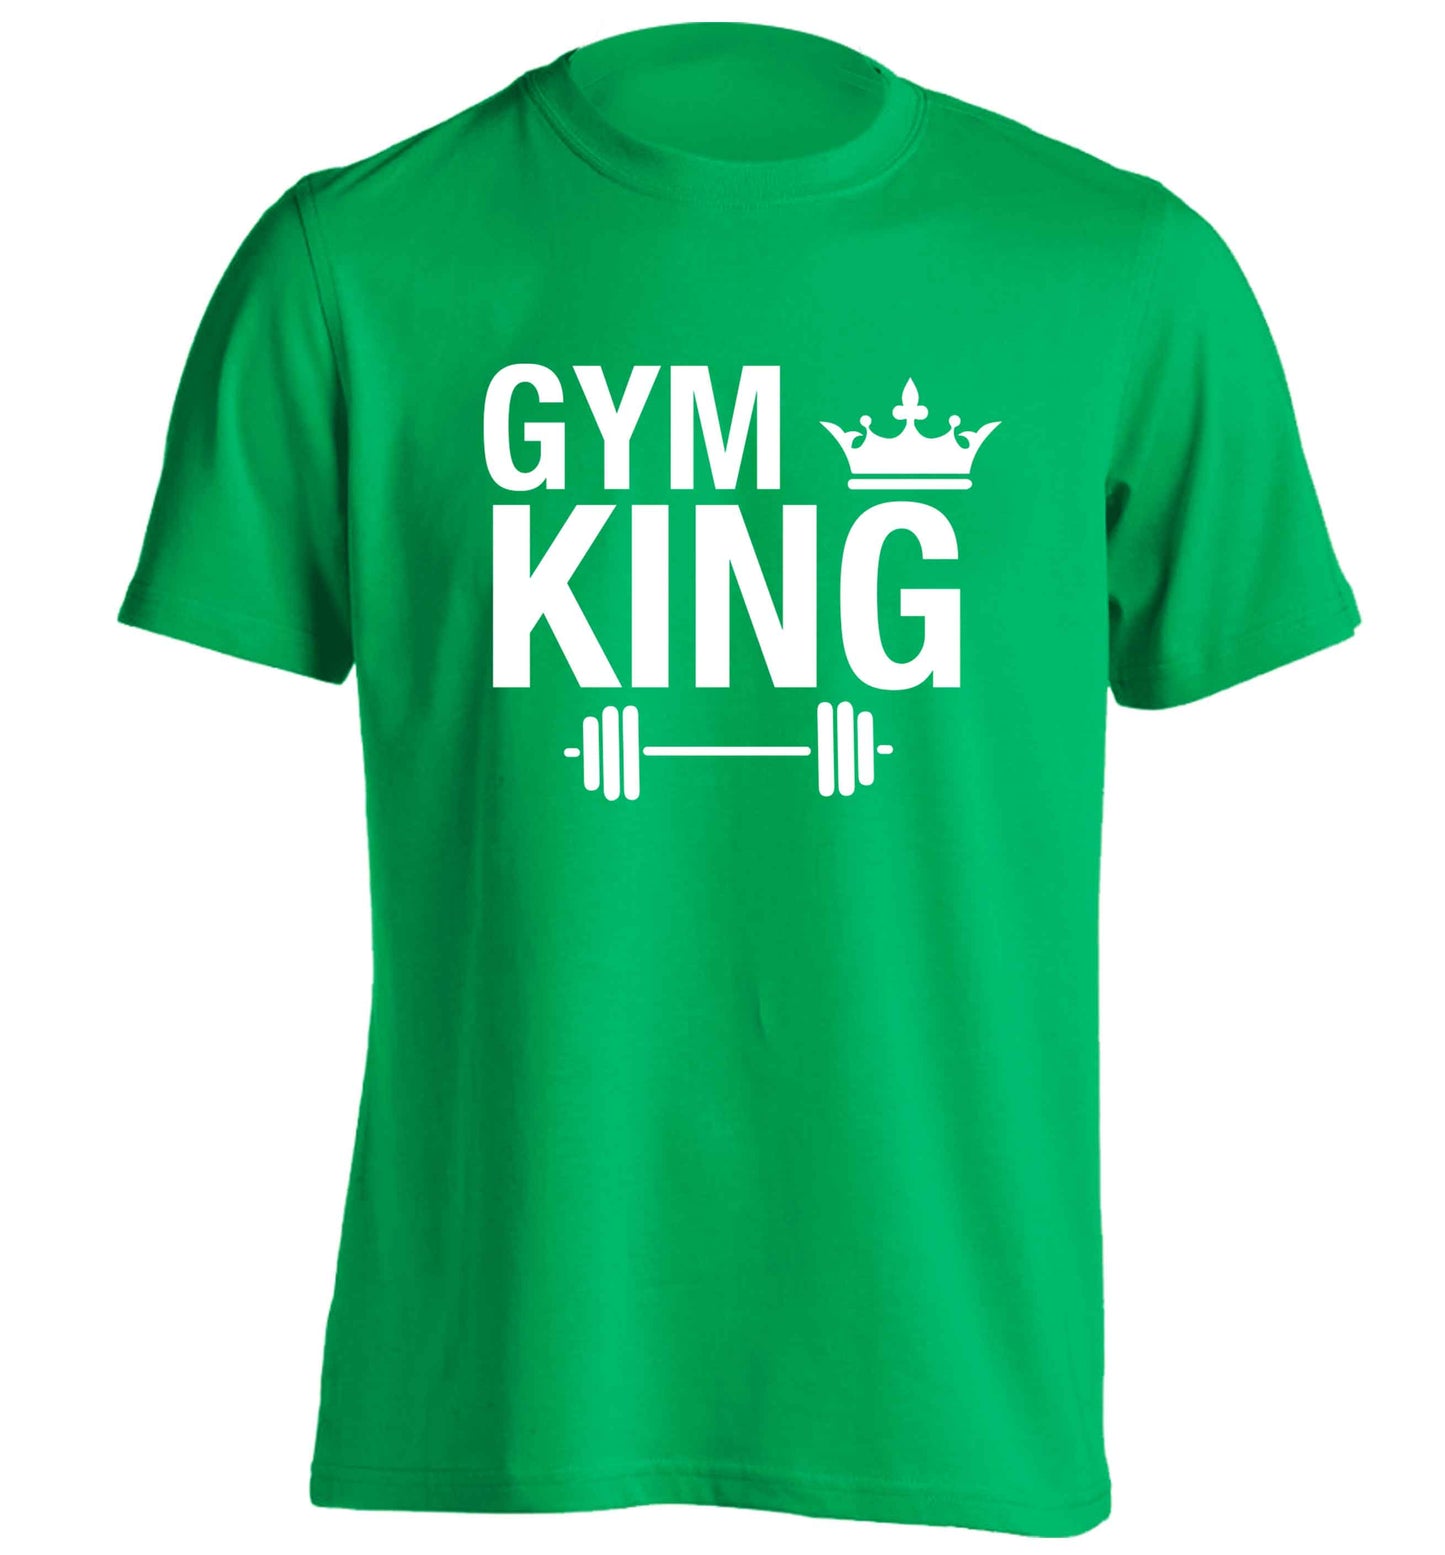 Gym king adults unisex green Tshirt 2XL